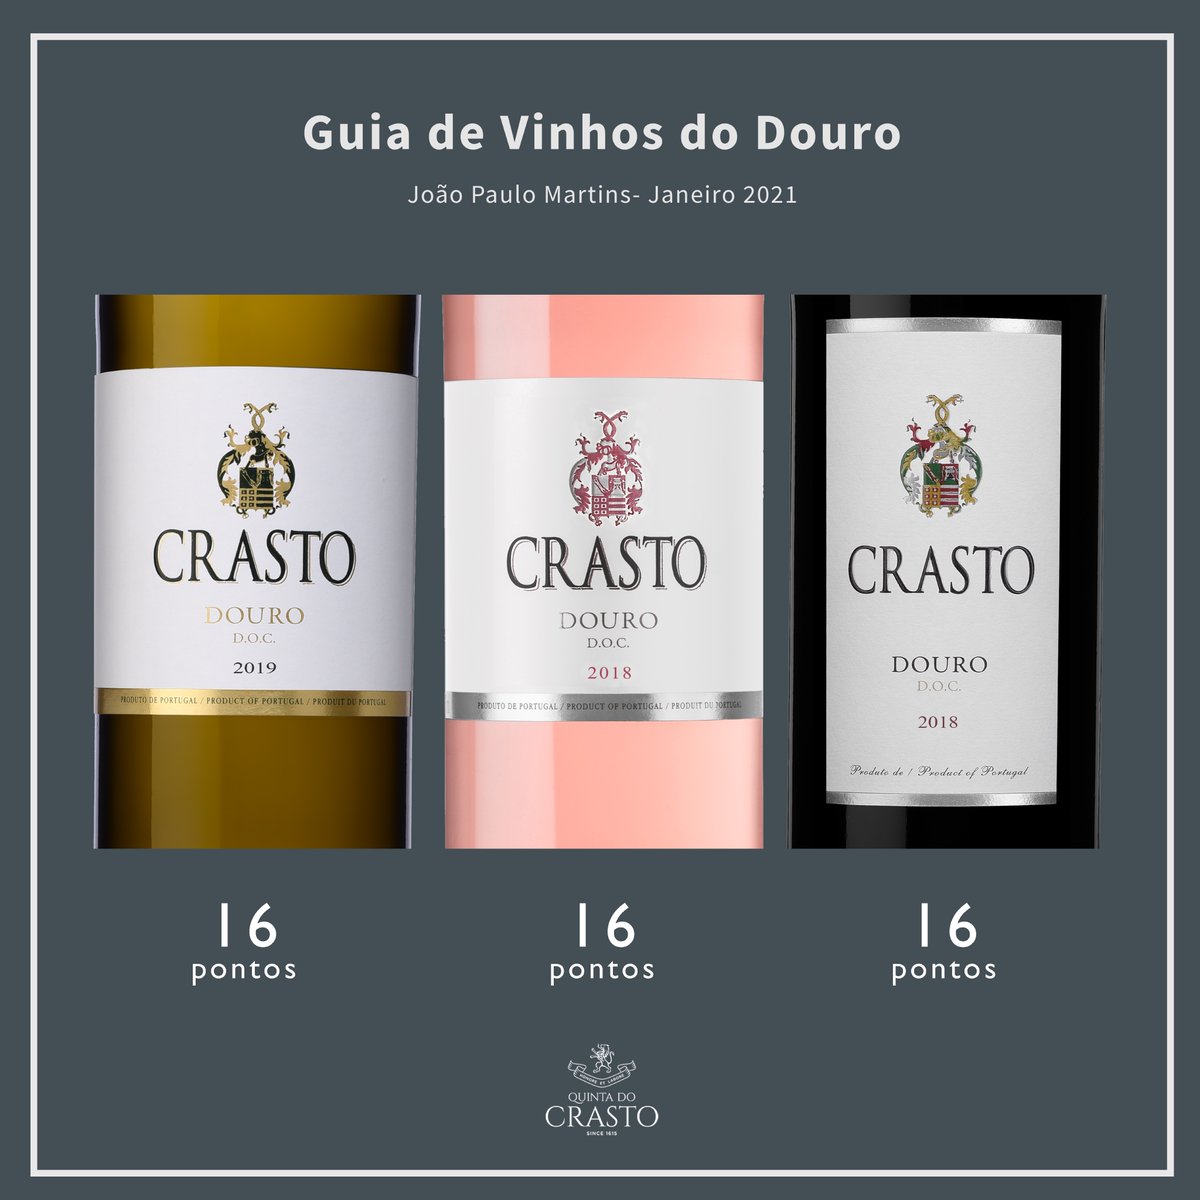 Latest scores attributed to the #wines #CrastoRed , #CrastoRosé and #CrastoWhite at #GuiadeVinhosdoDouro by #JoãoPauloMartins.🍷✨
#QuintadoCrasto #Douro #Portugal #Wein #Weine #Vin #Vins #Vino #ワイン #와인 #вино #Viini #WinesofPortugal
🔞Be responsible, drink in moderation.